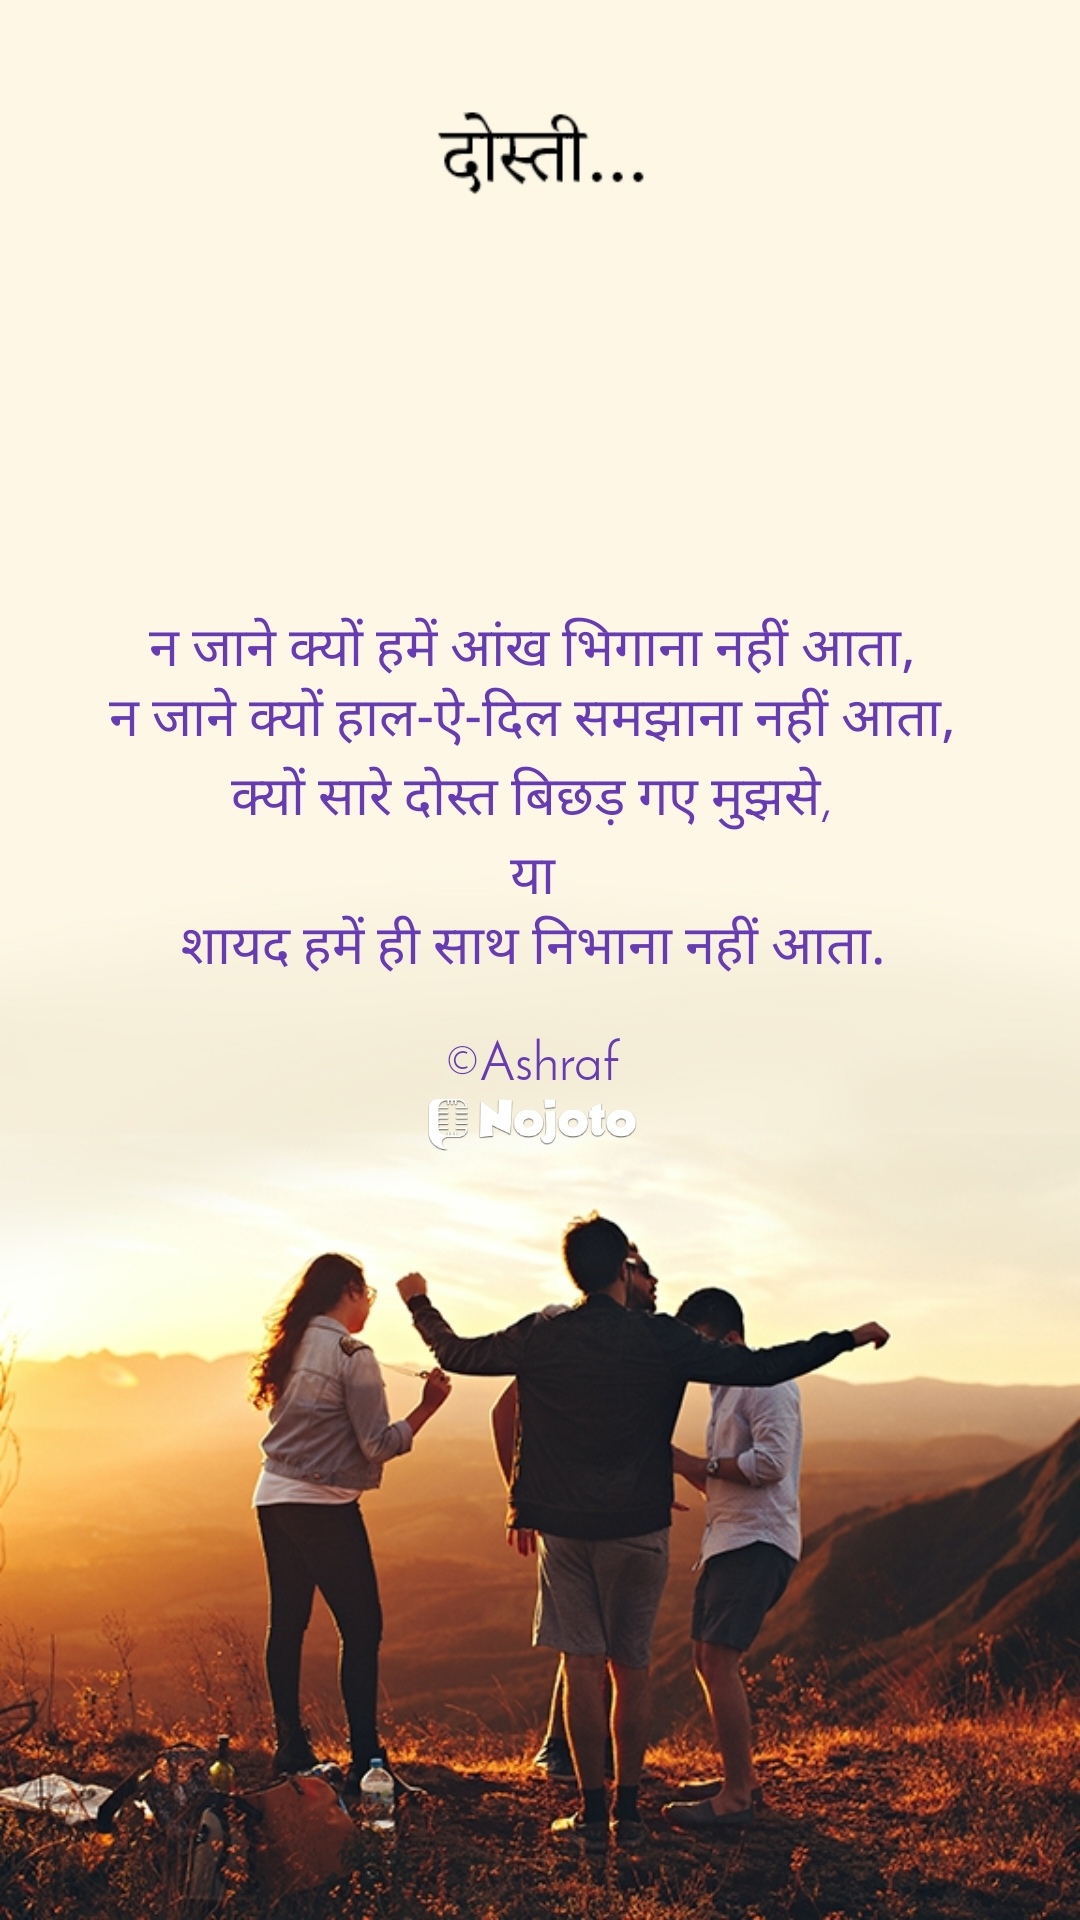 #Friendship ❤️

#Quotes #shayri #Dosti